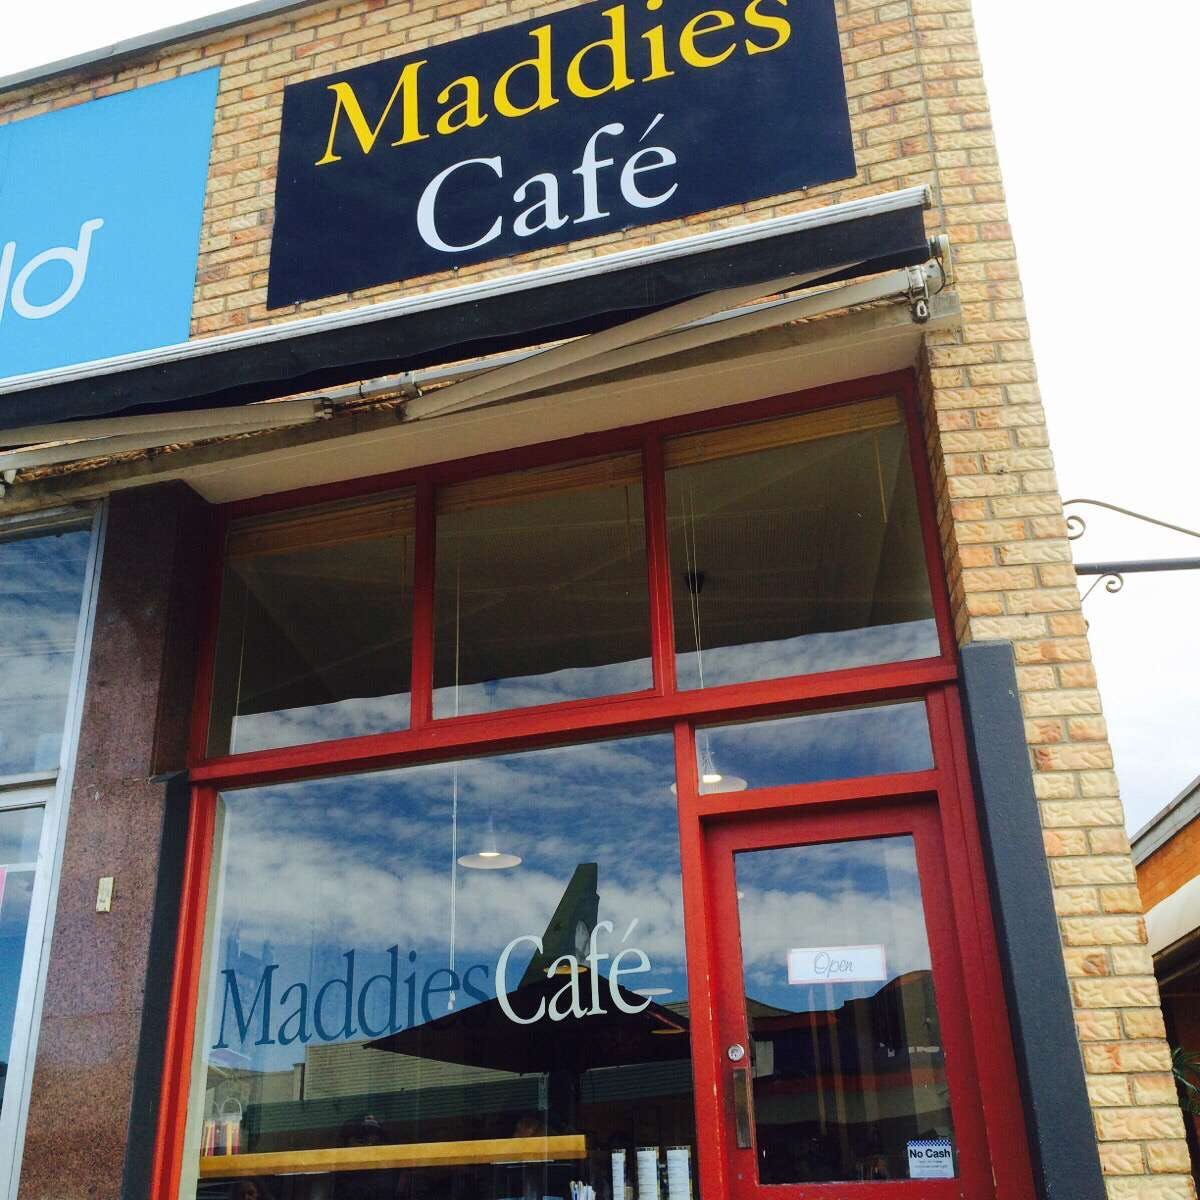 Maddies Cafe - Pubs Sydney